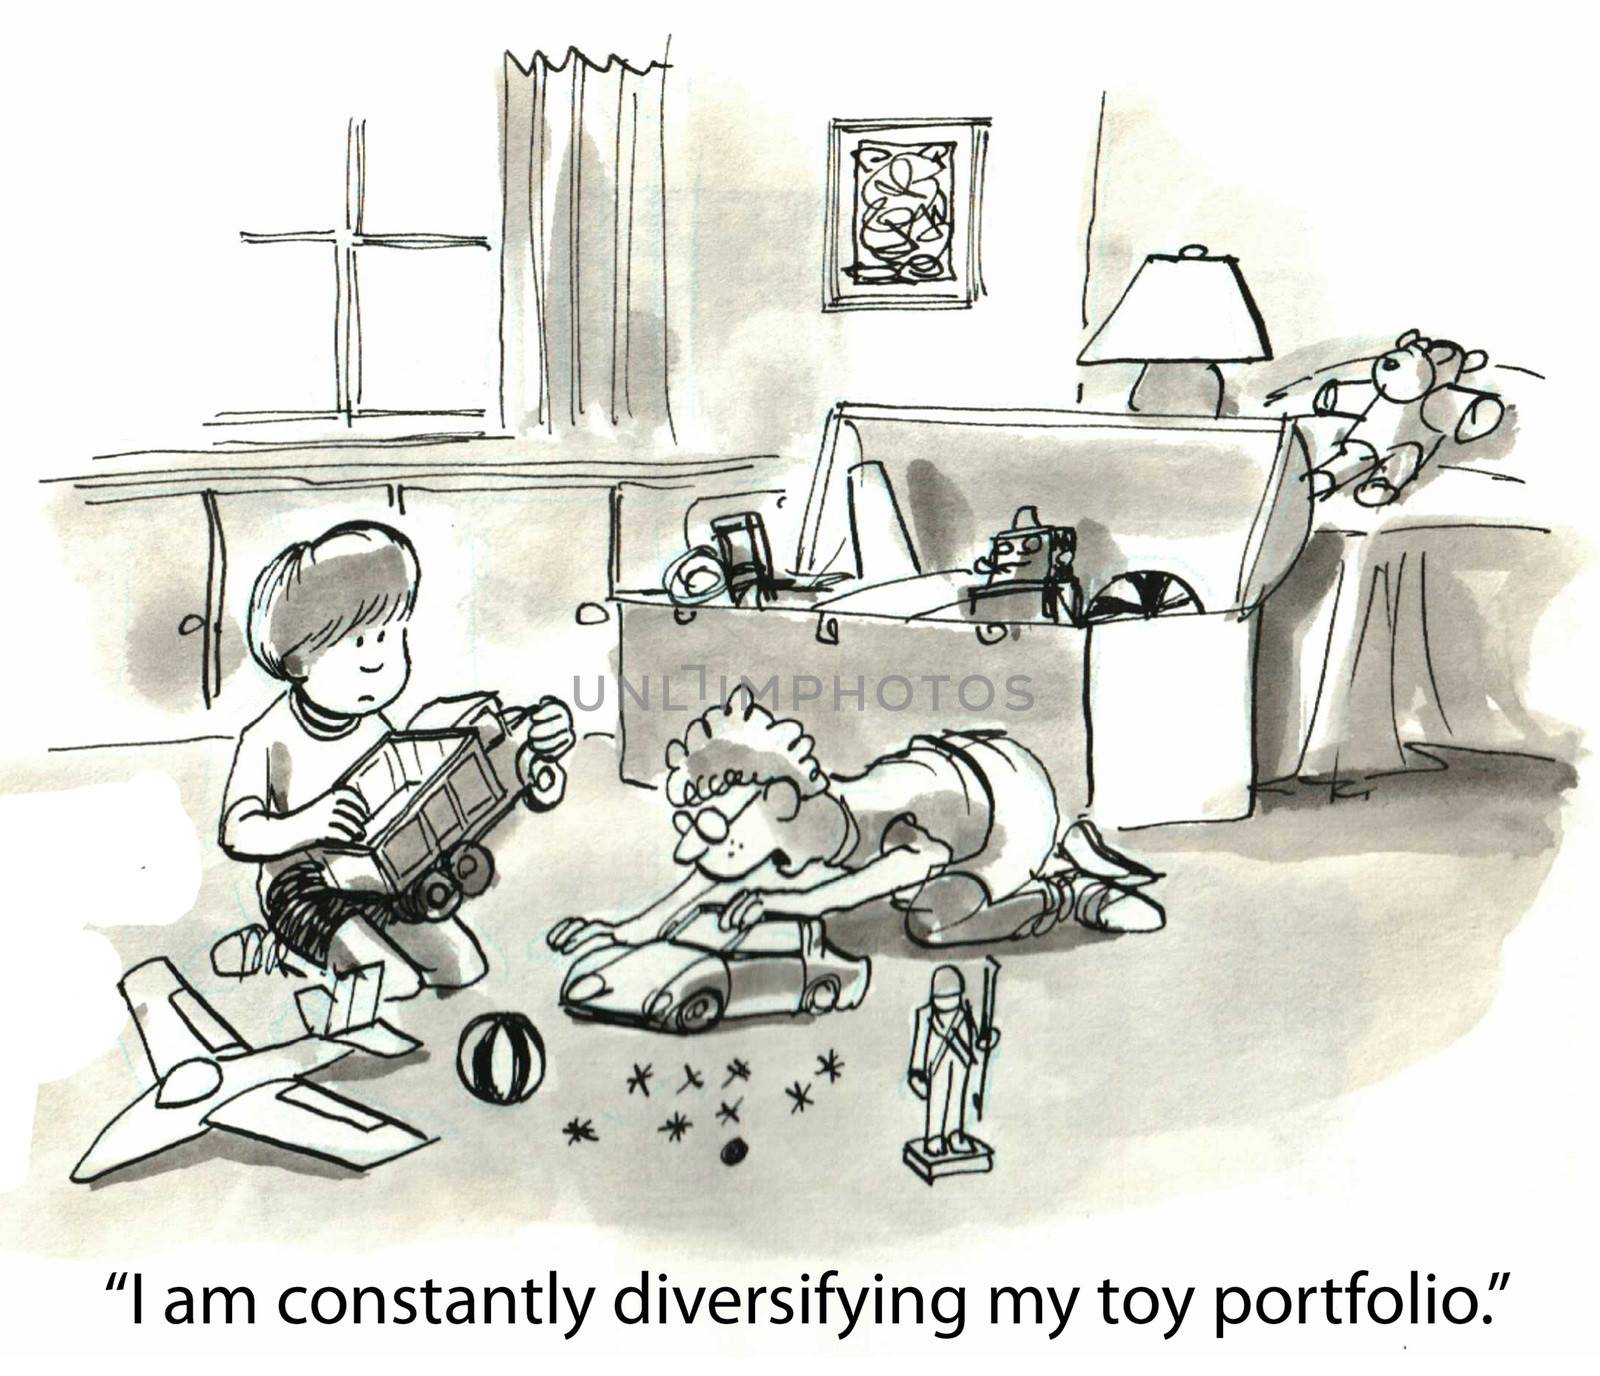 "I am constantly diversifying my toy portfolio."